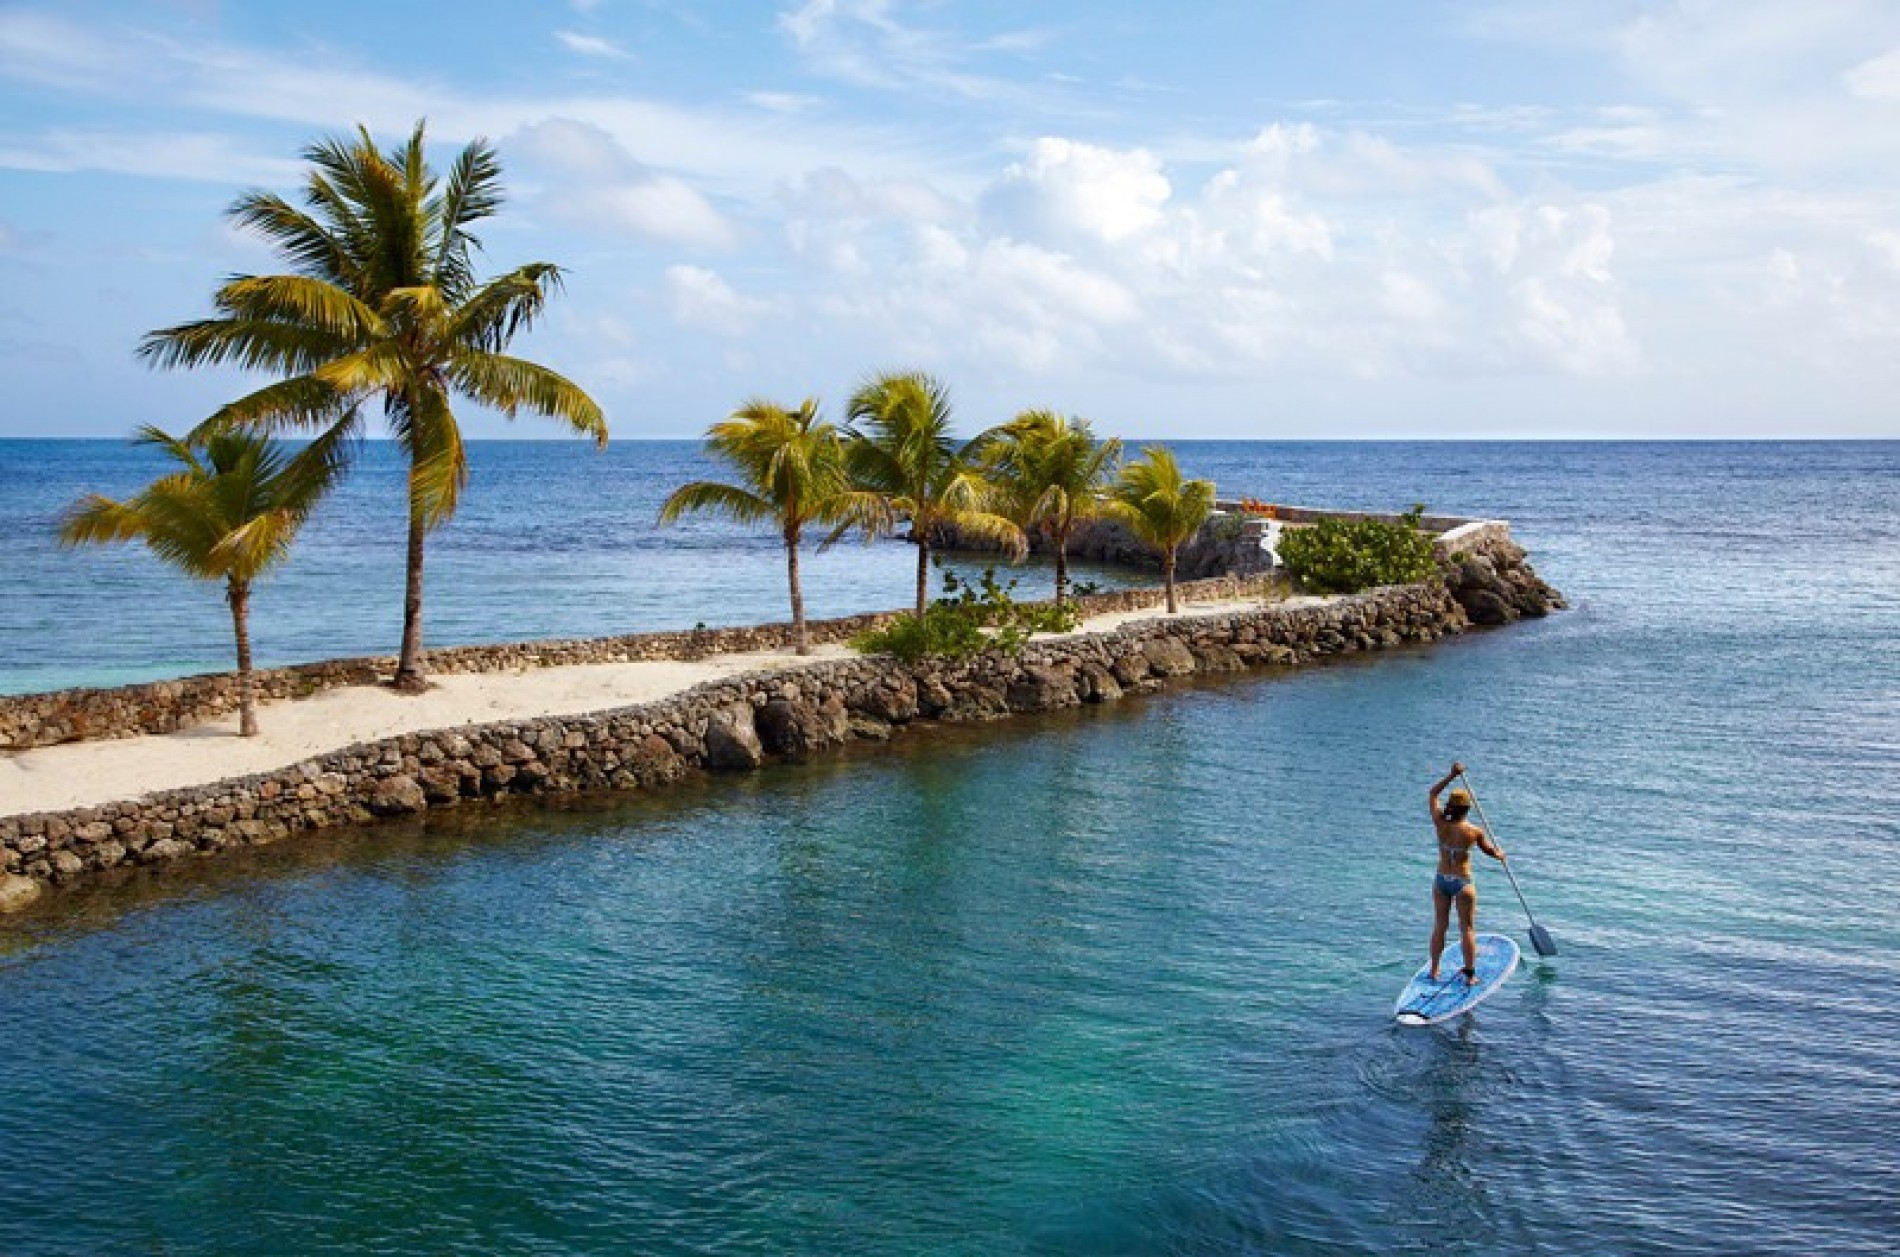 GoldenEye Resort: Villa, Cottage or Hut Rentals › Ocho Rios, Jamaica